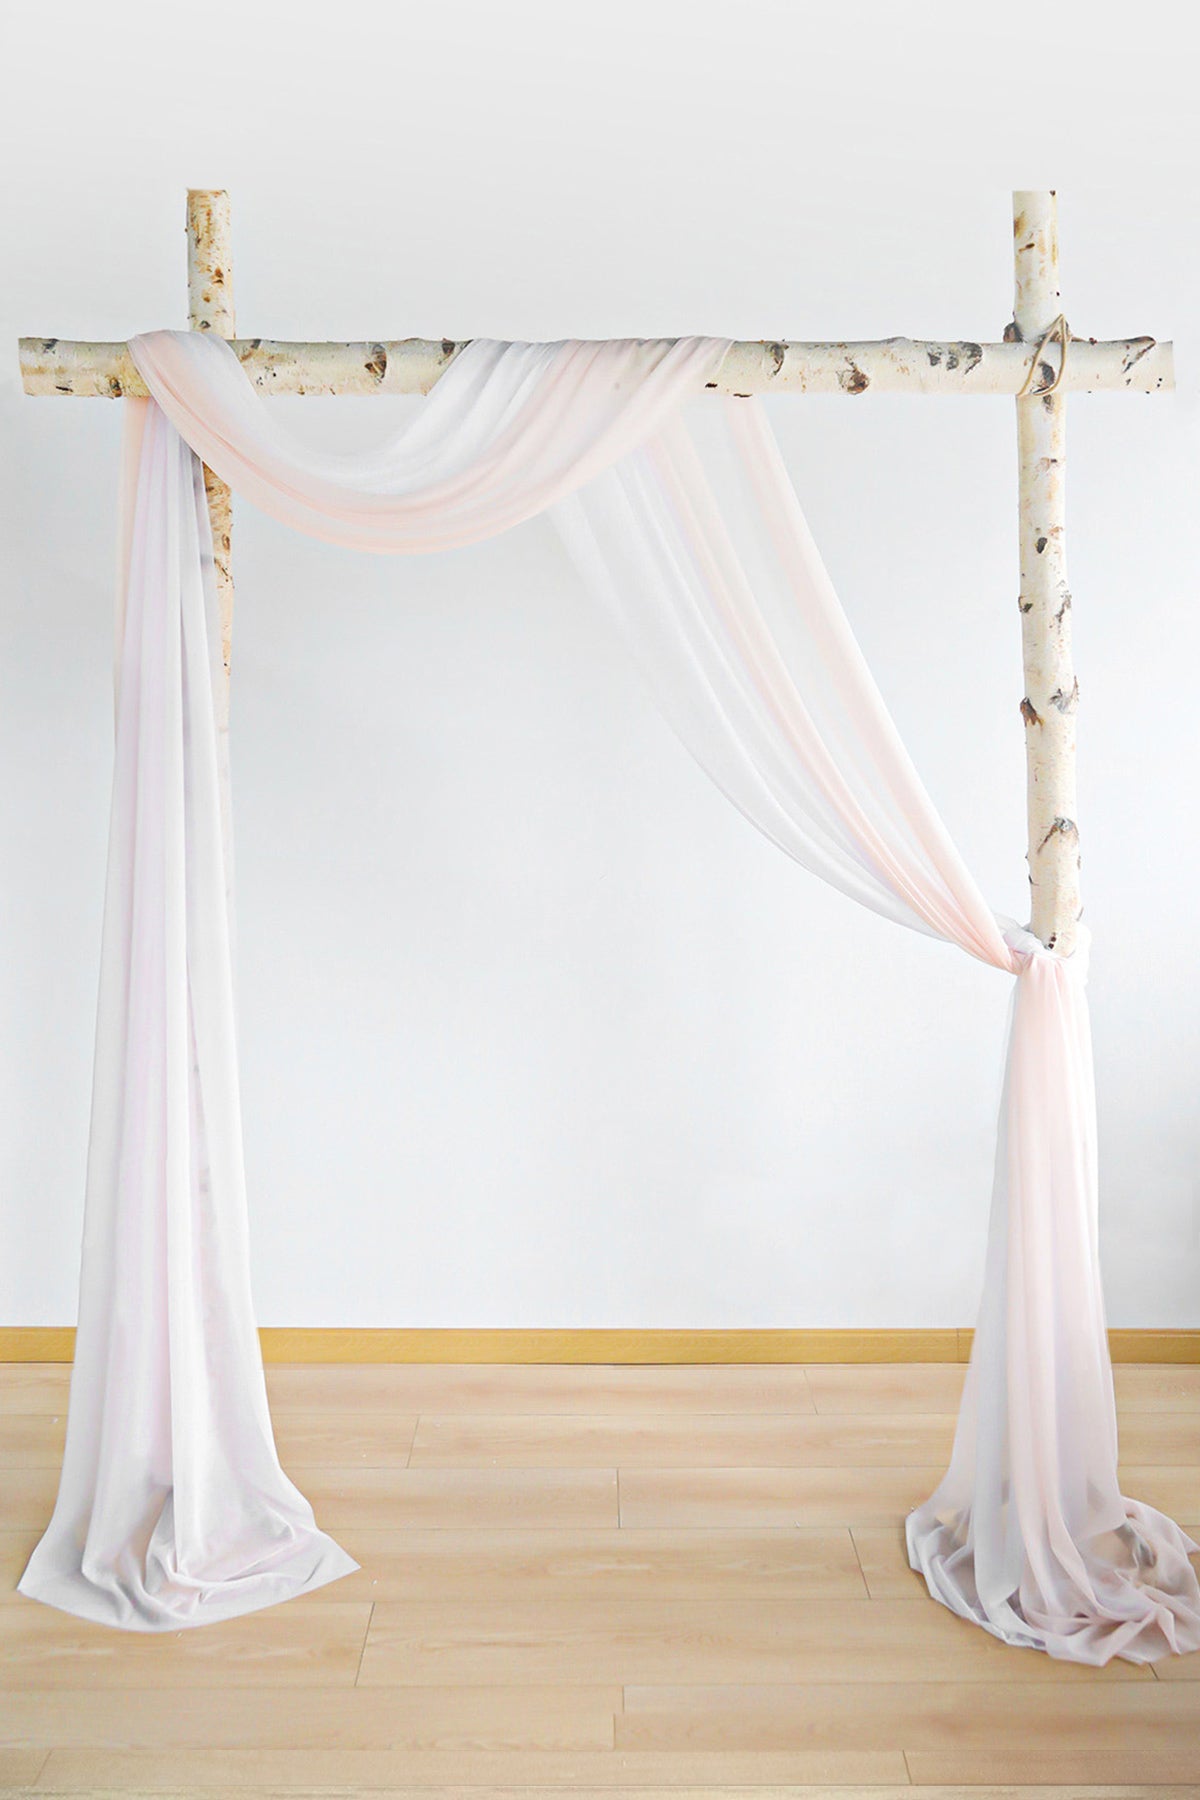 2 Pcs Rustic Wedding Arch Draping 29"w x 19.7ft - Blush Pink & White